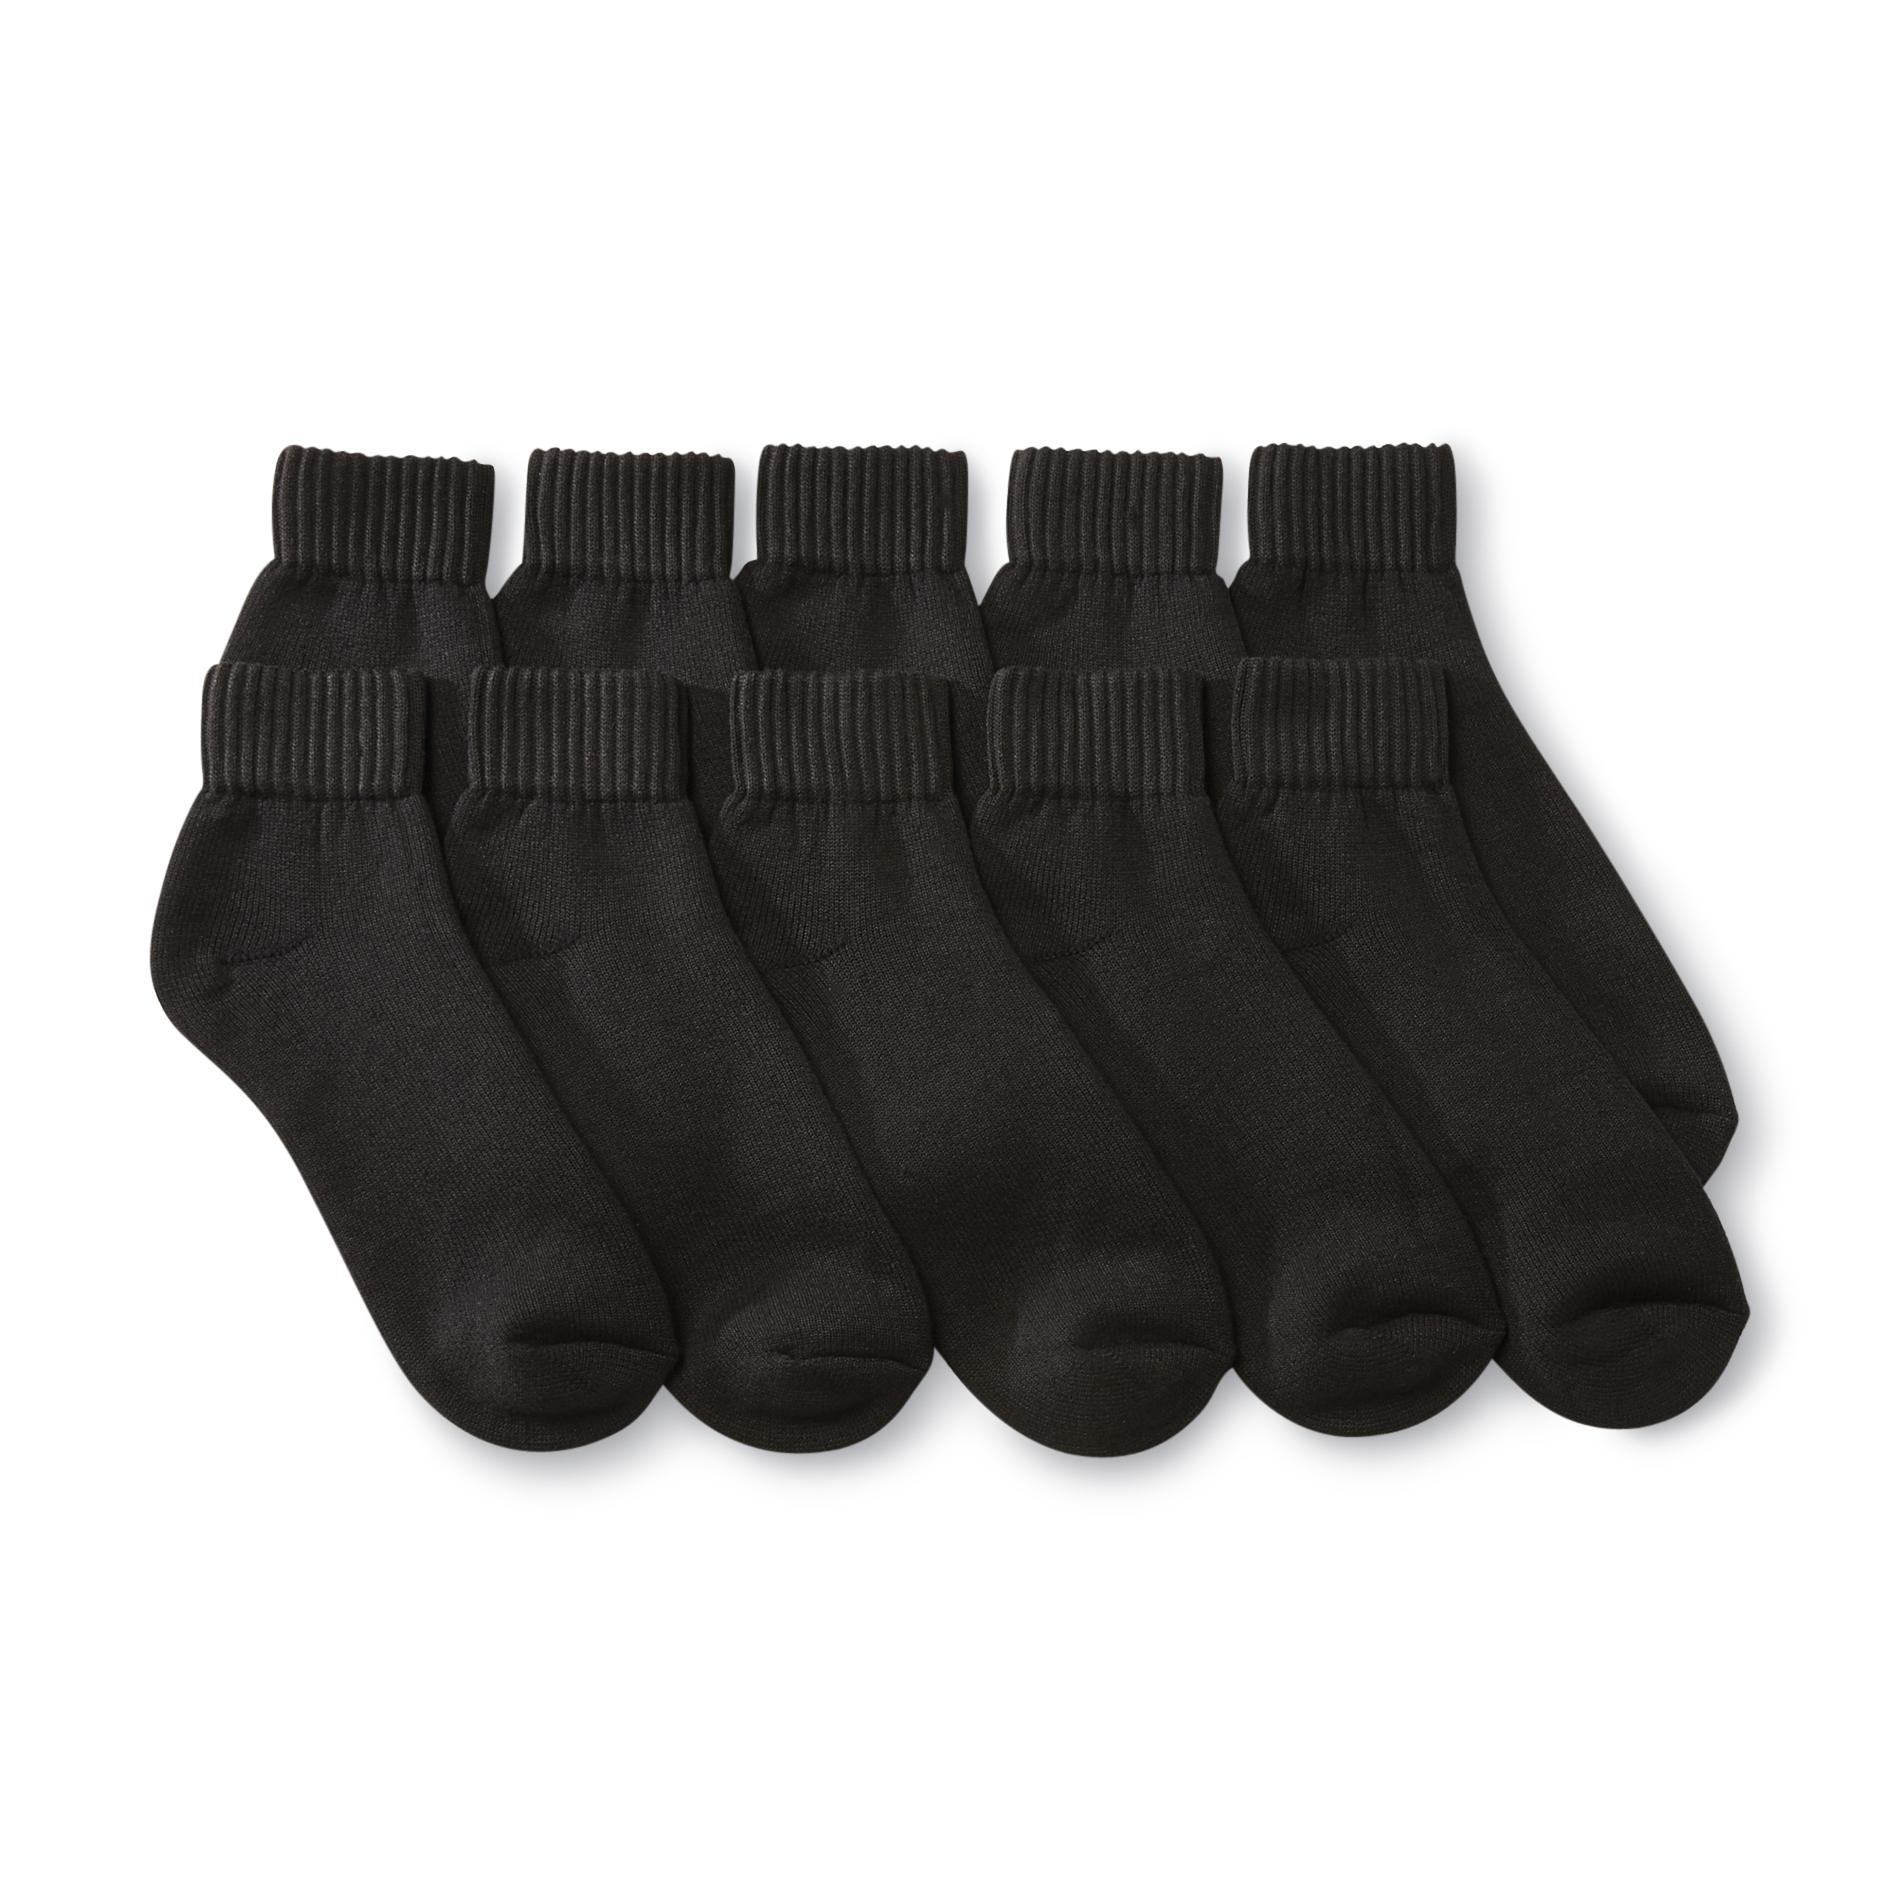 NordicTrack Men's Quarter Length Performance Socks